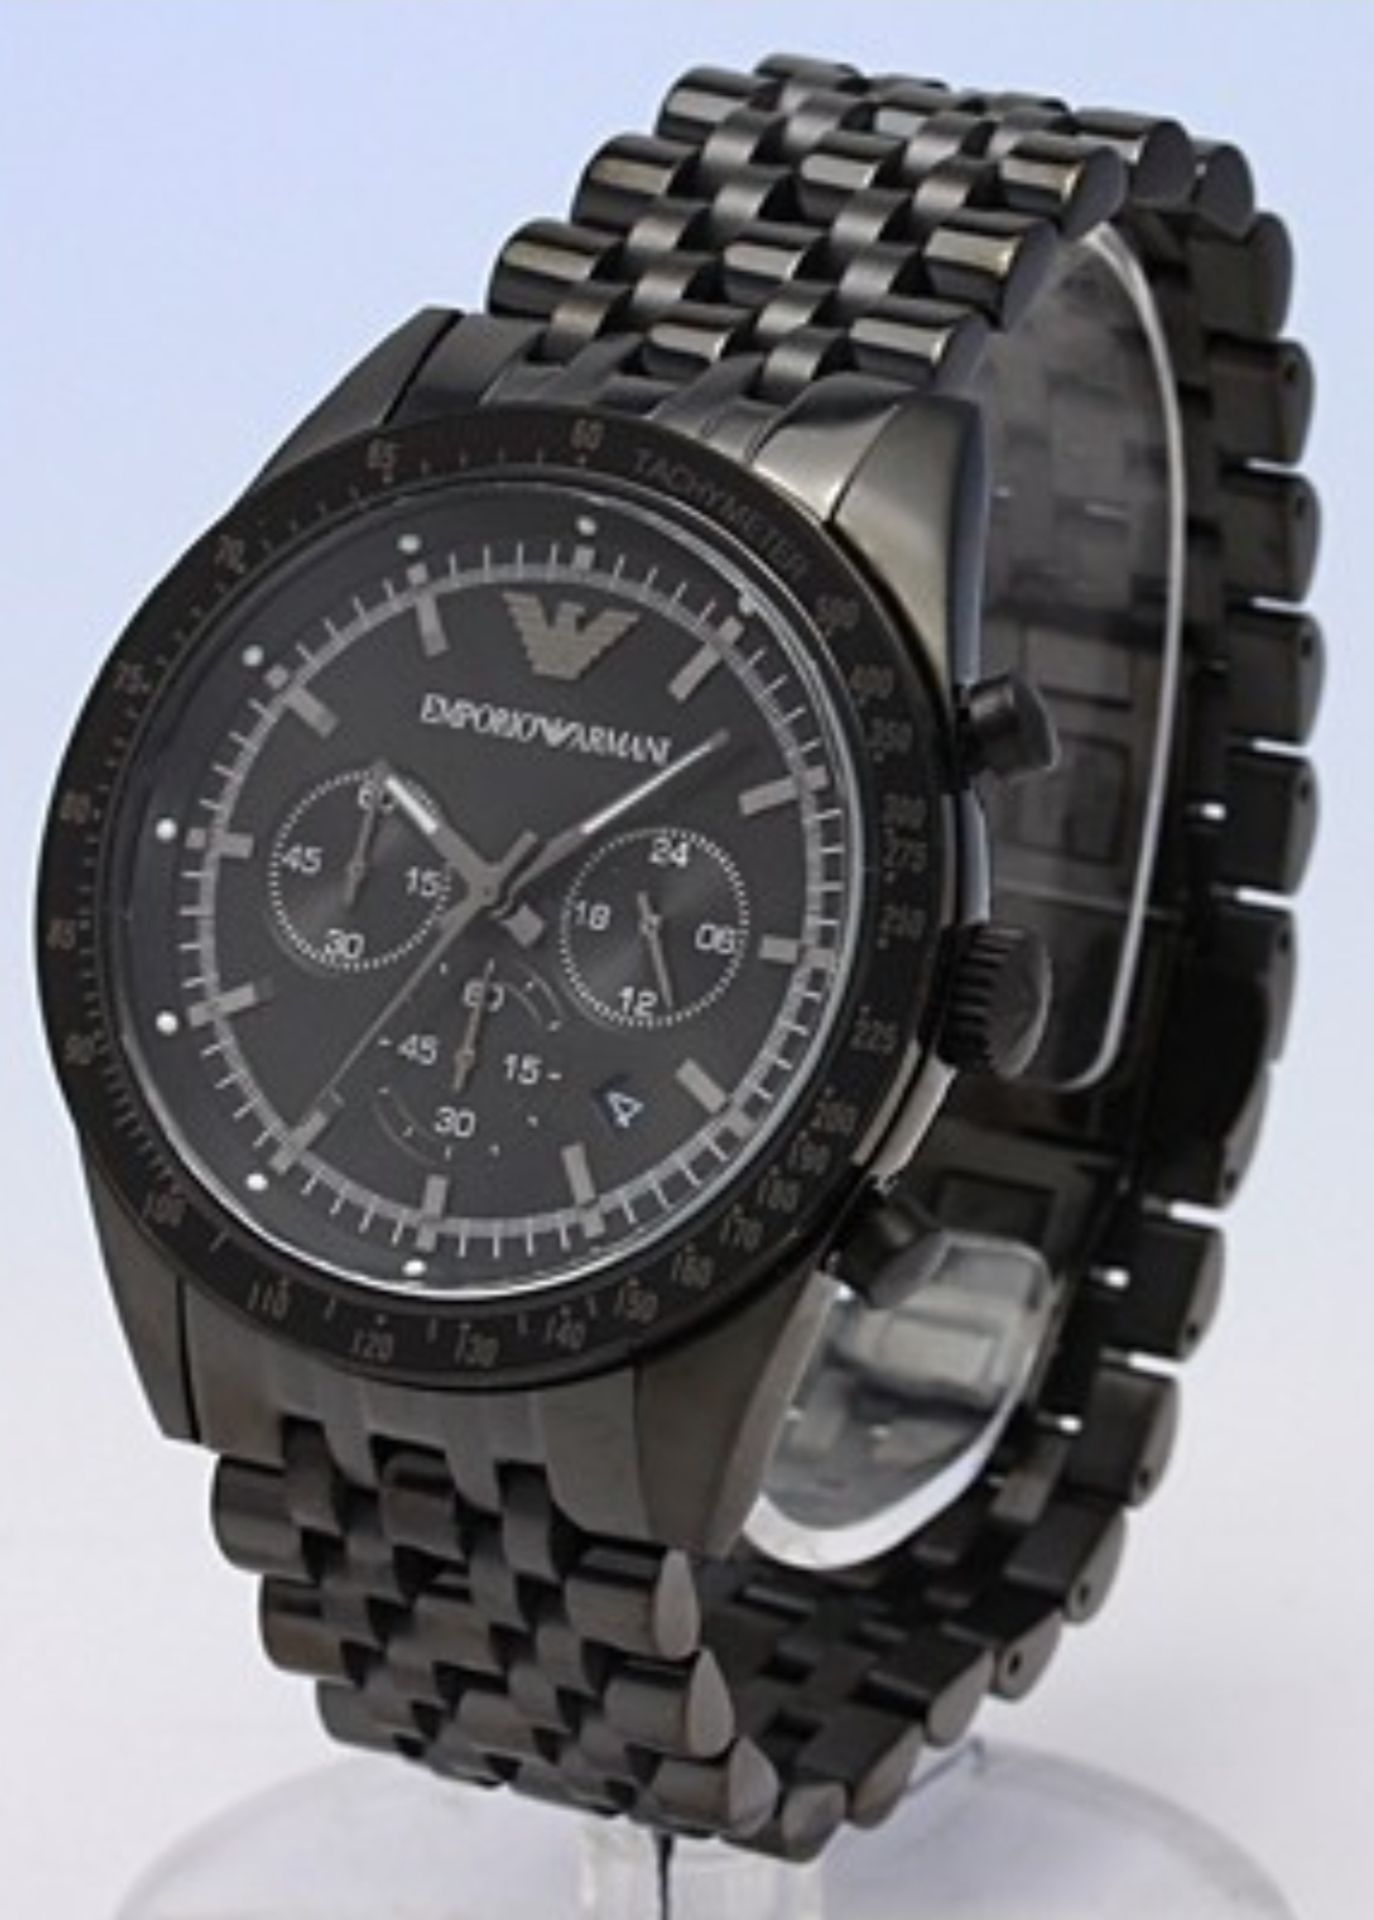 Emporio Armani AR5989 Men's Tazio Black Stainless Steel Bracelet Chronograph Watch - Image 7 of 9